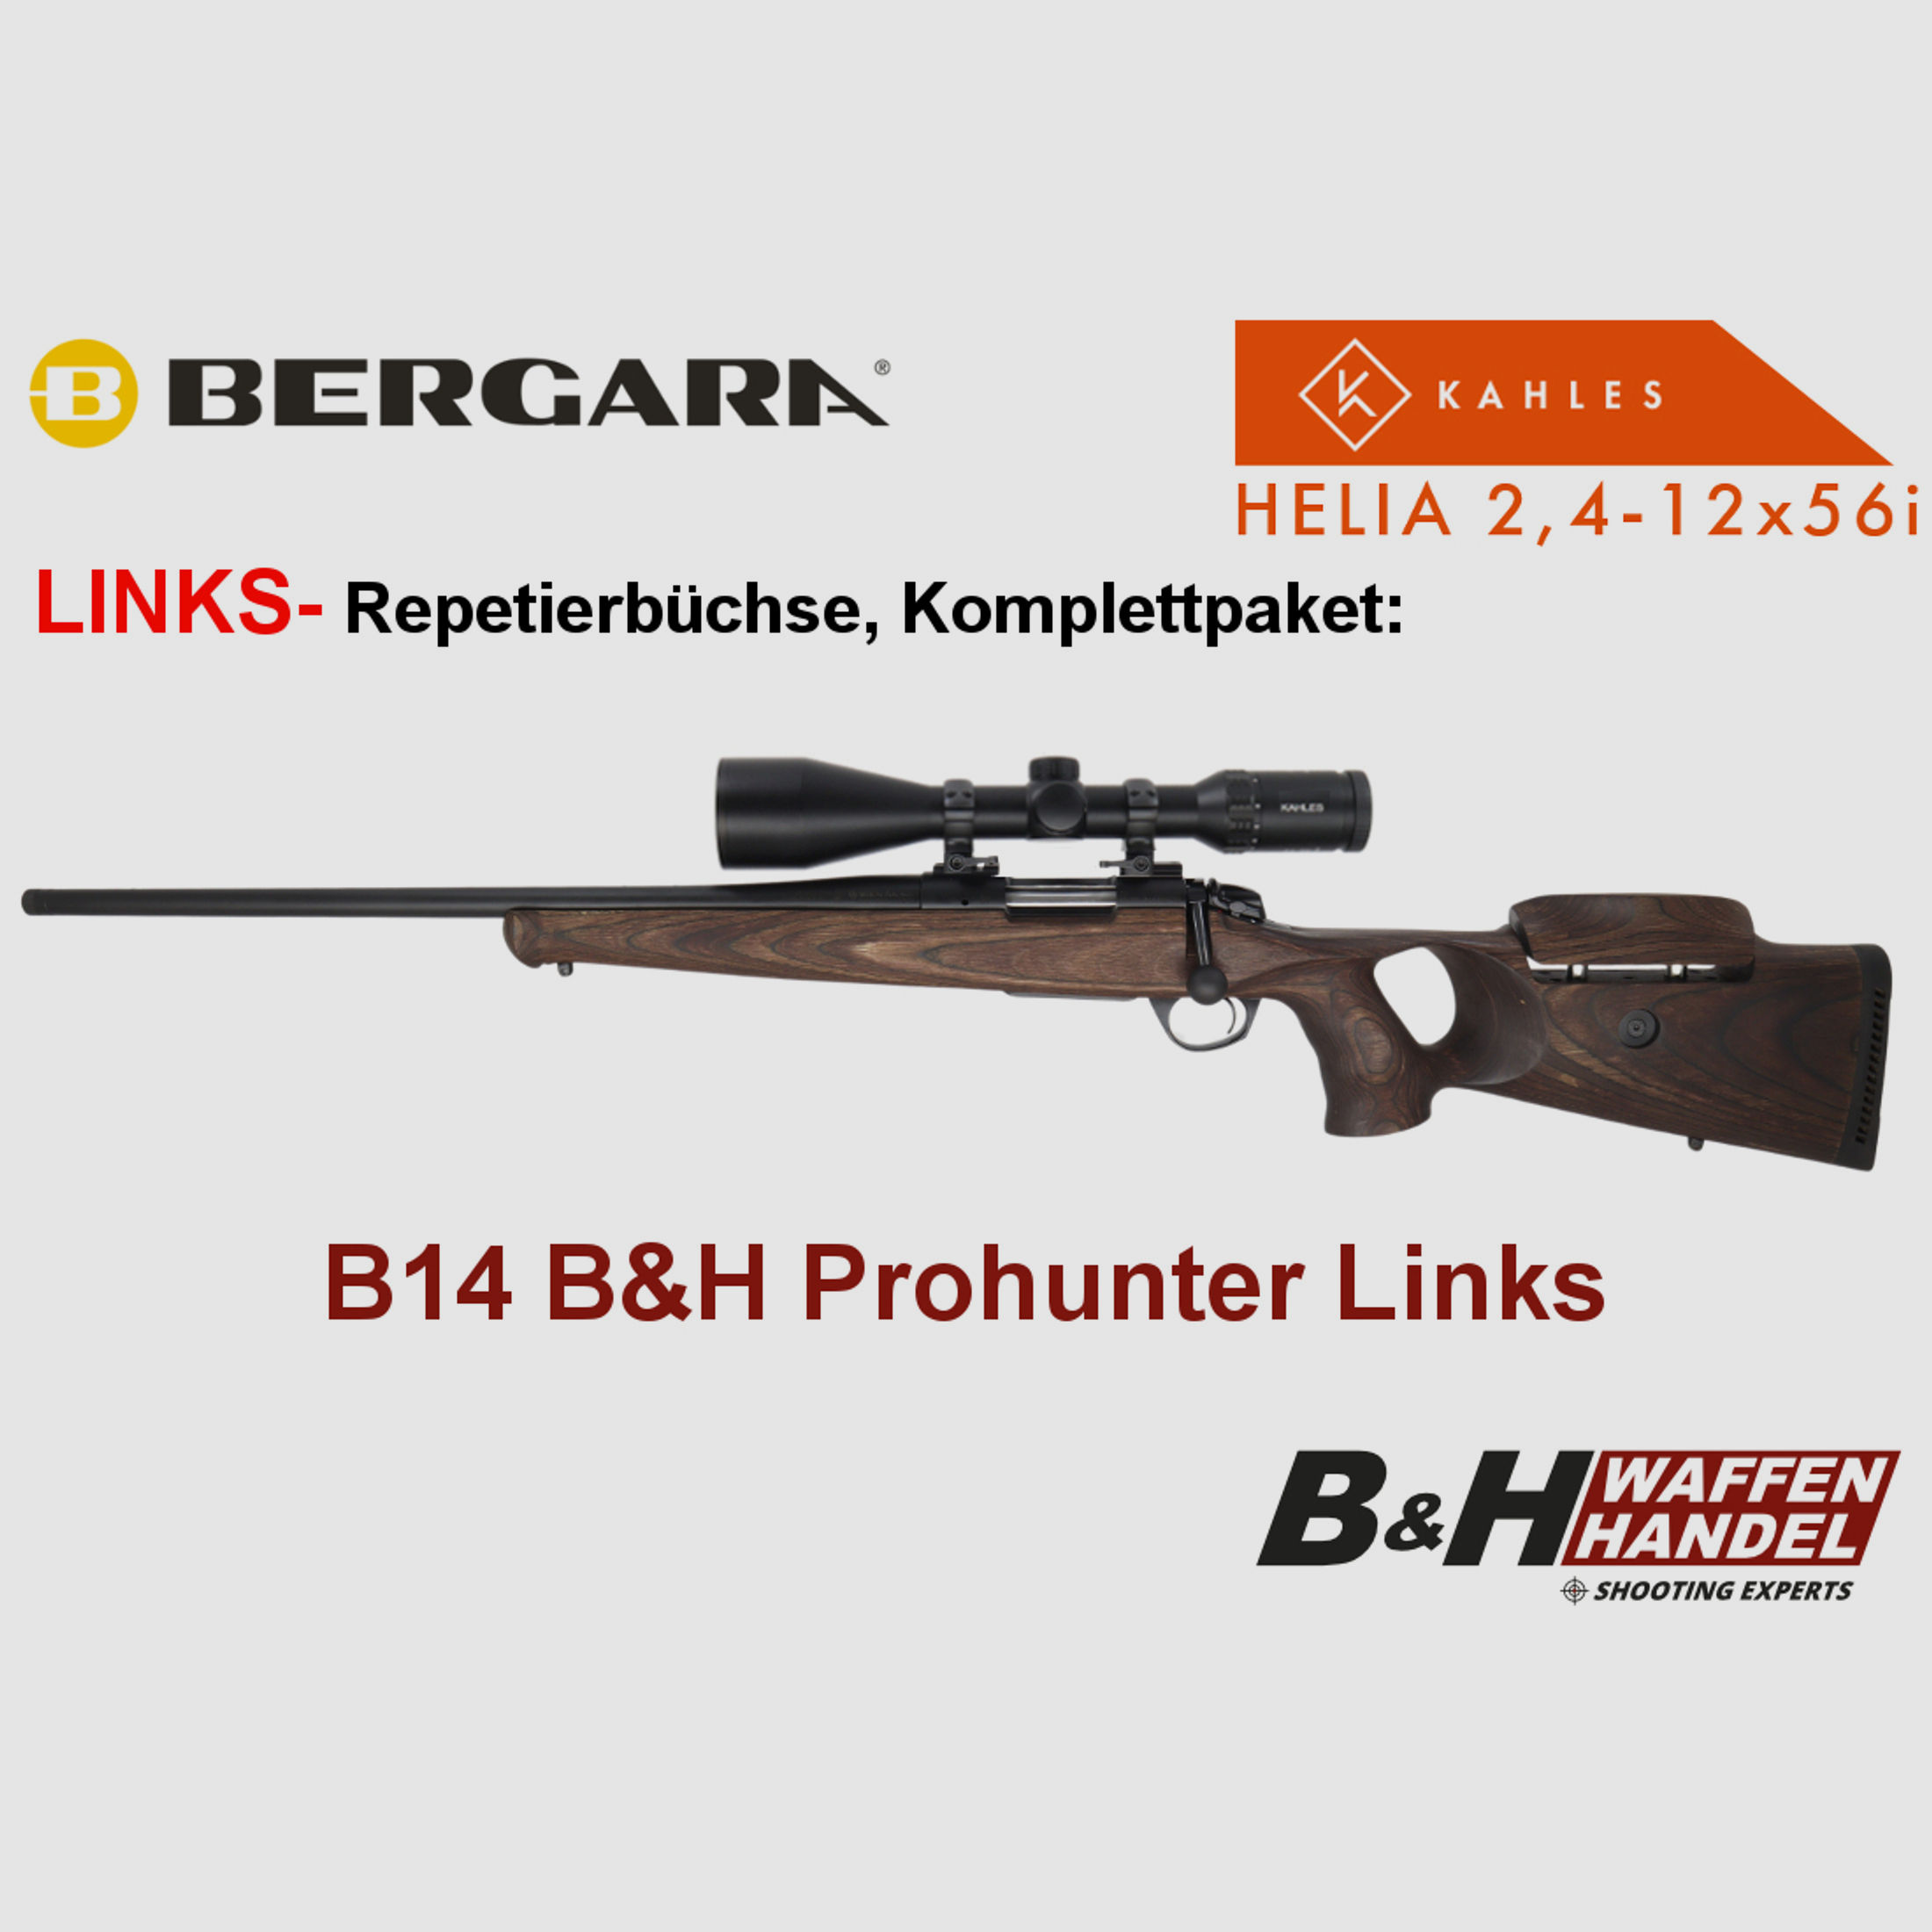  Bergara B14 B&H Prohunter LINKS Lochschaft mit Kahles Helia 2.4-12x56 fertig montiert / Optional: Brenner Schalldämpfer